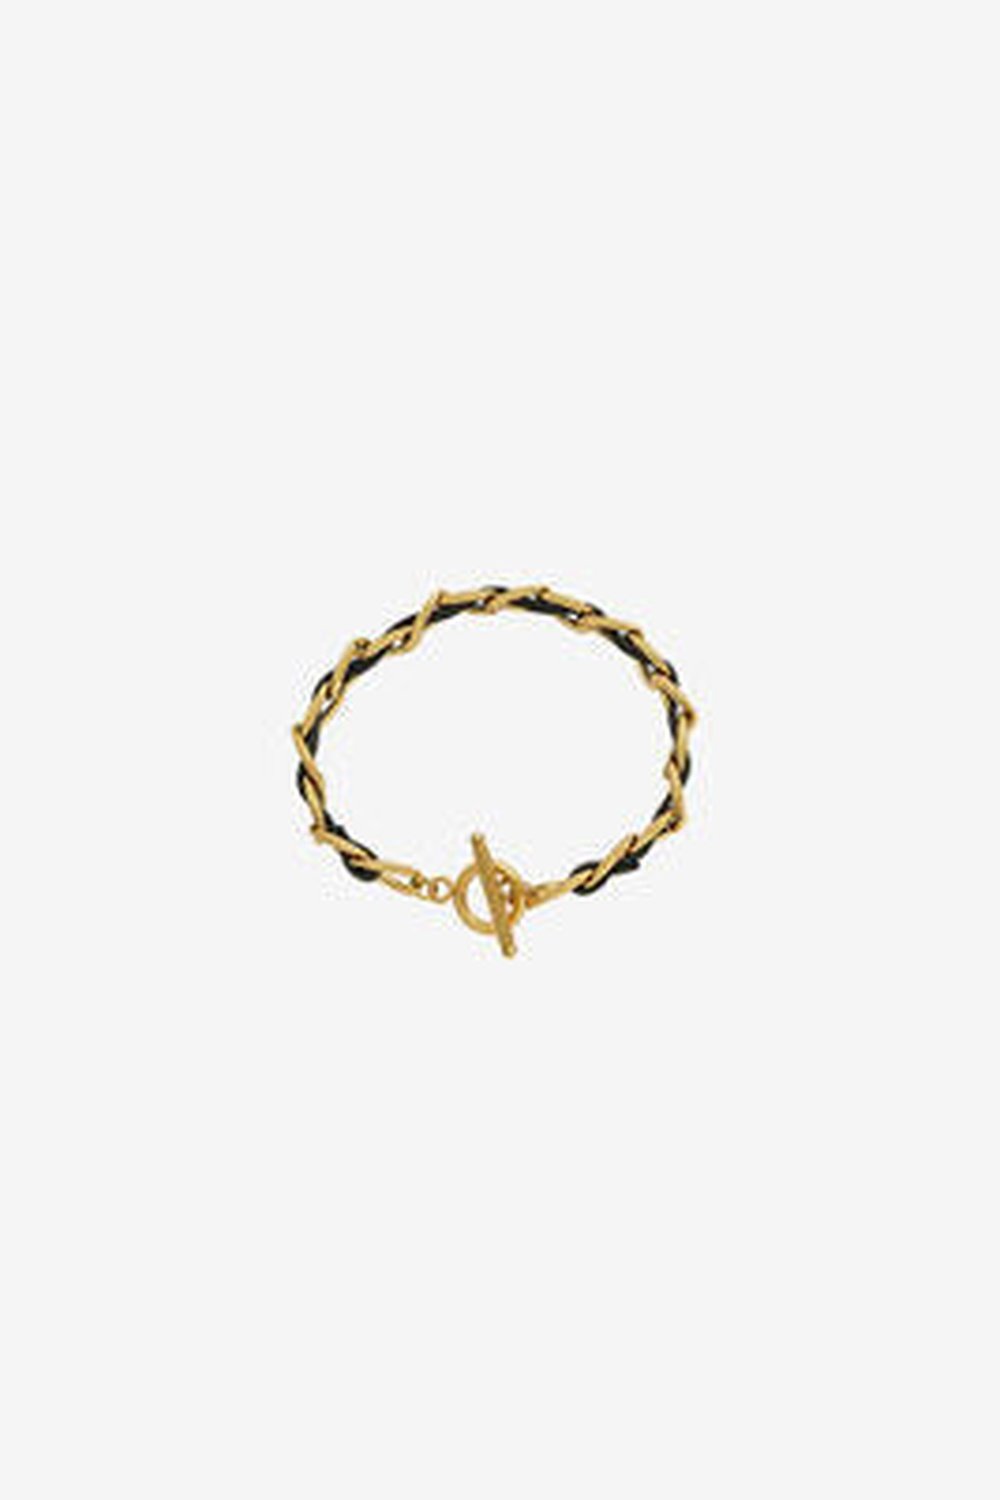 18K Gold-Plated Leather Chain Bracelet - Bracelets - FITGGINS